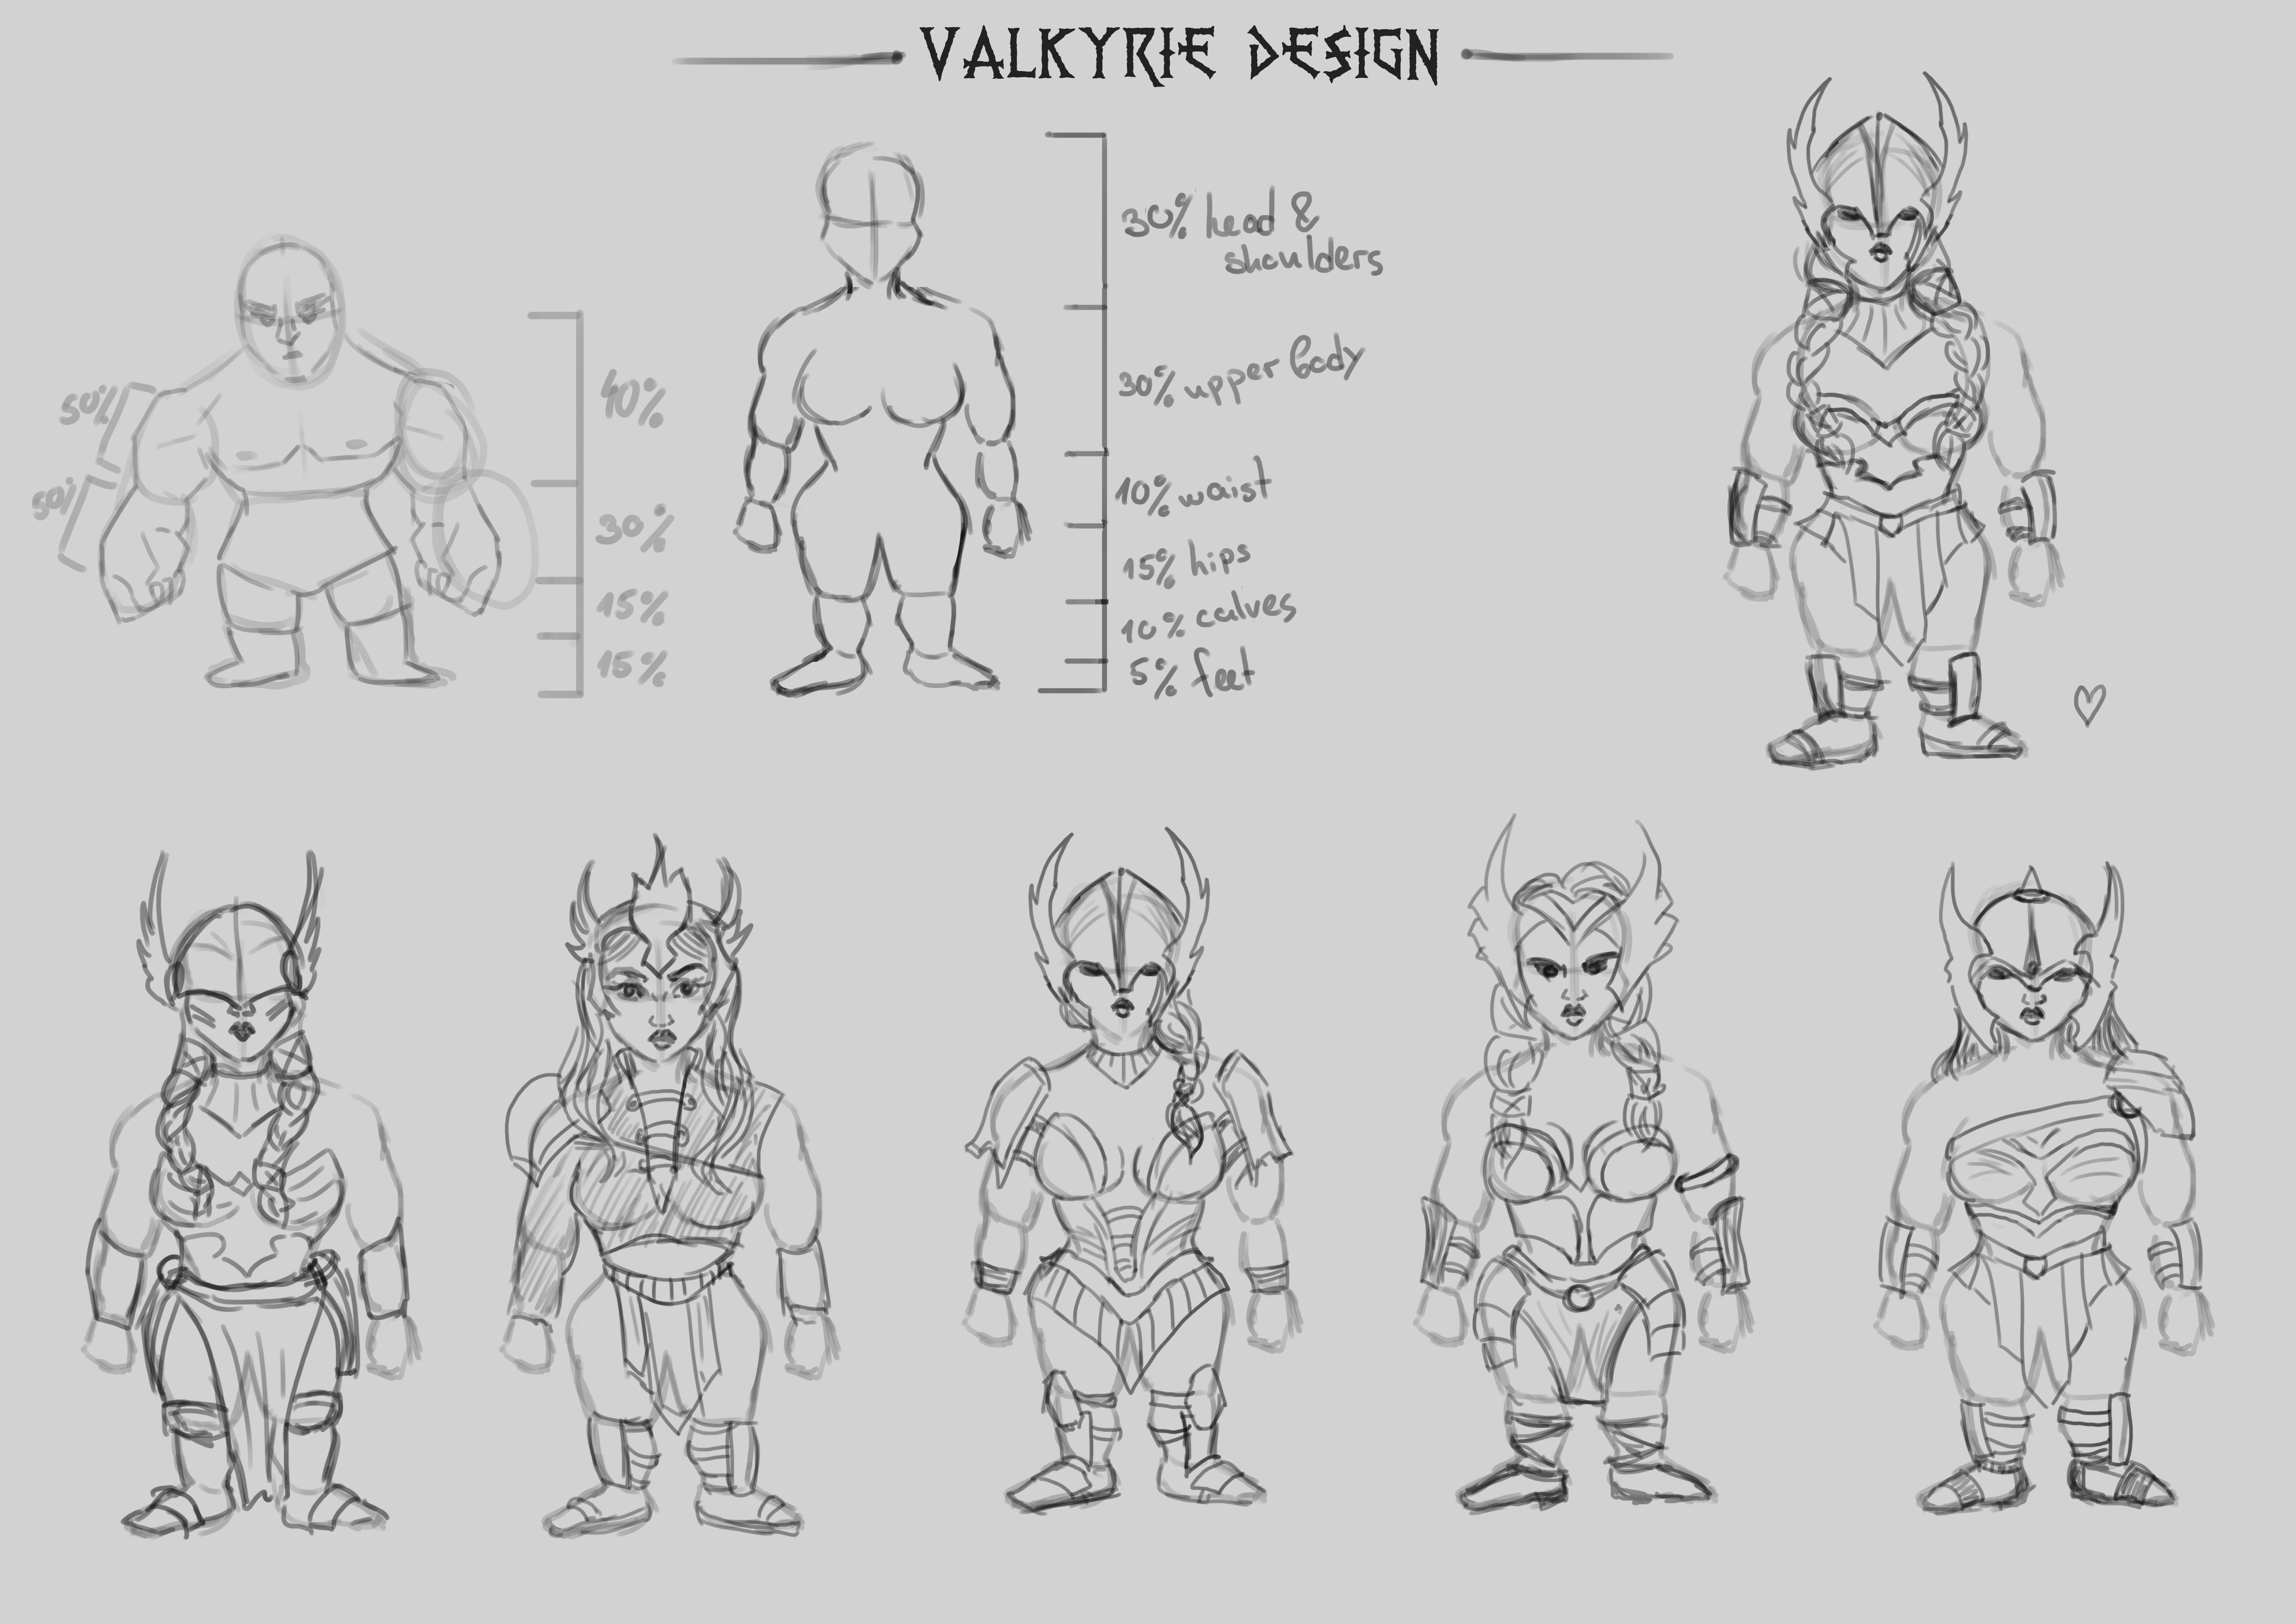 Valkyrie design sheet